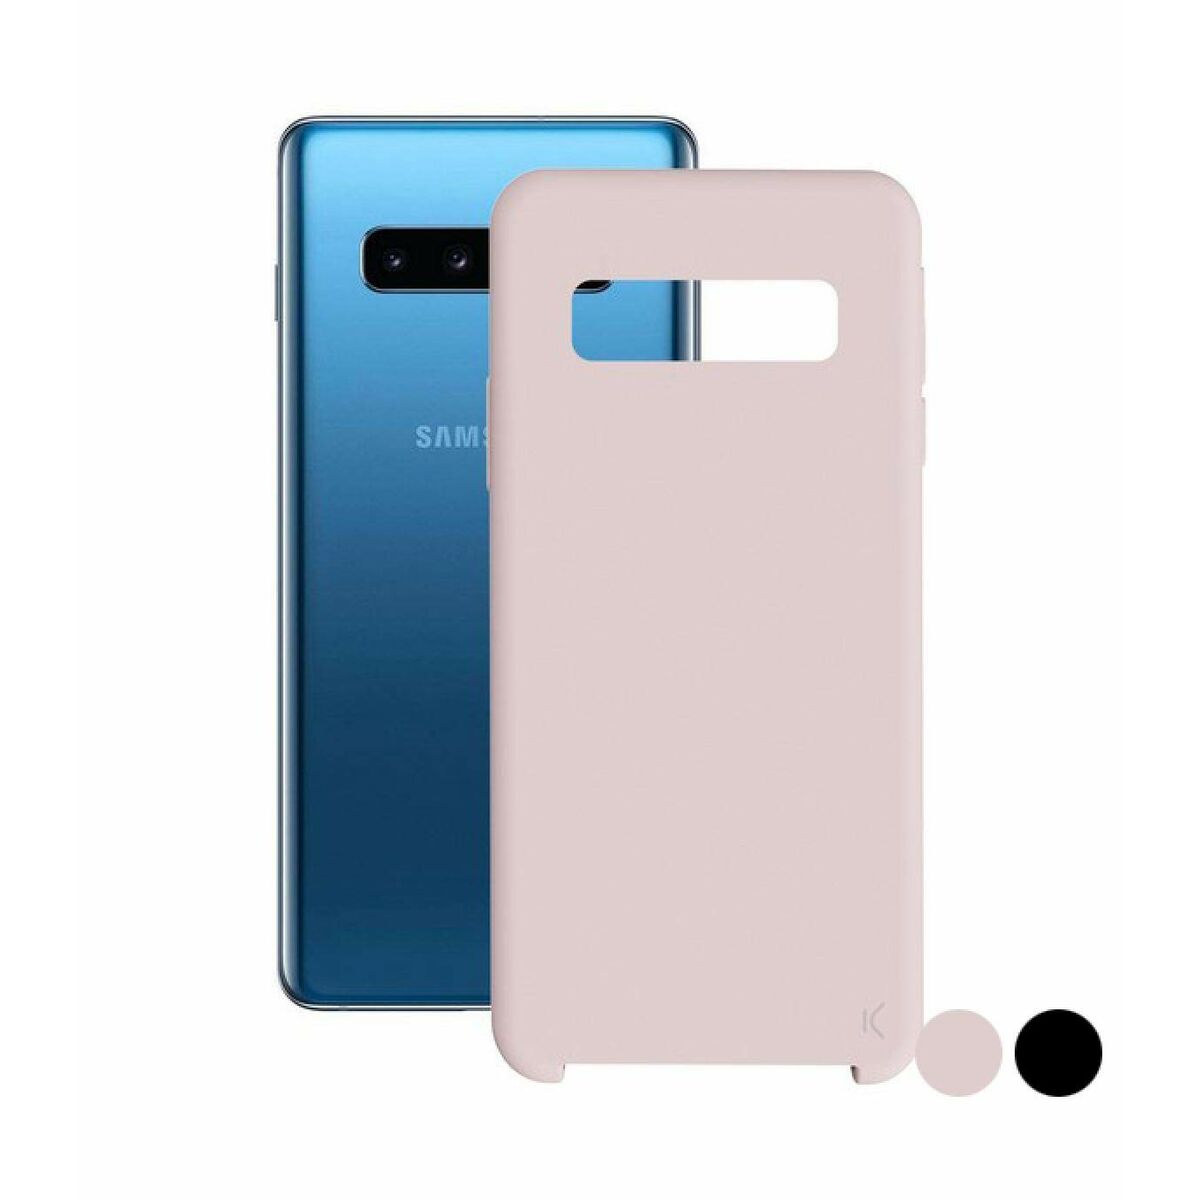 Protection pour téléphone portable Samsung Galaxy S10+ KSIX Galaxy S10 Plus Samsung